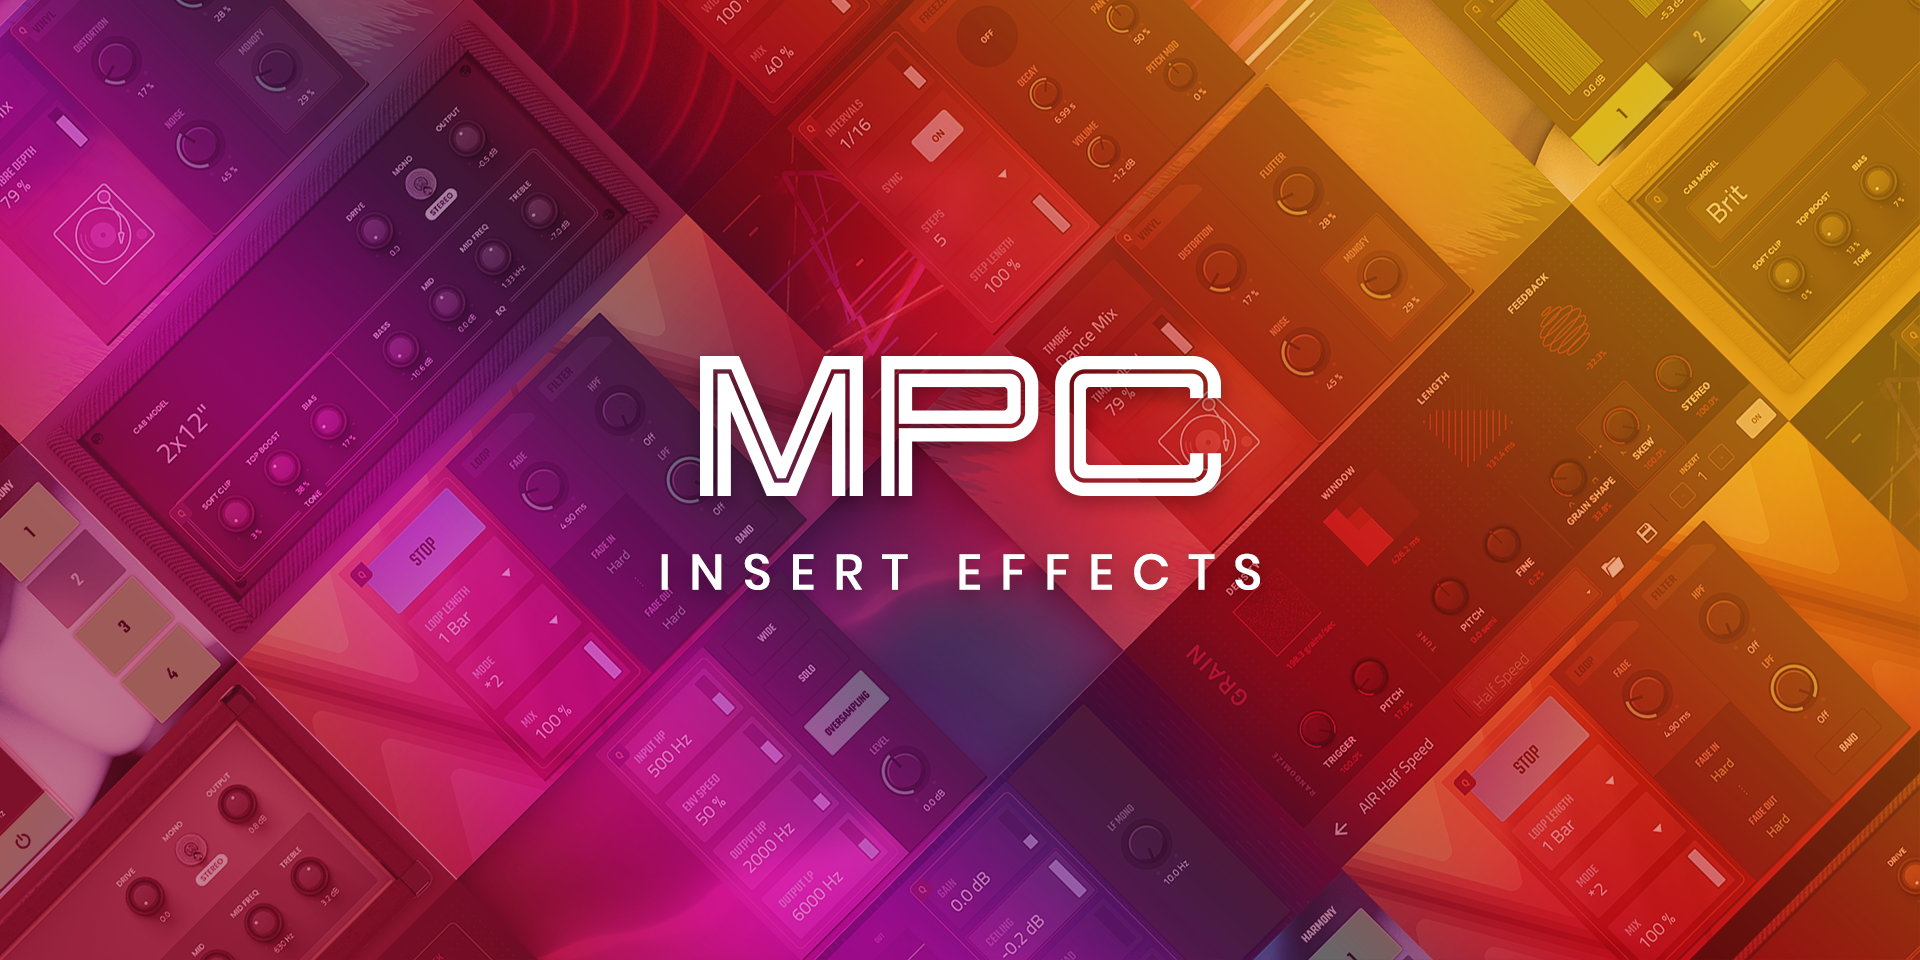 MPC Insert Effects